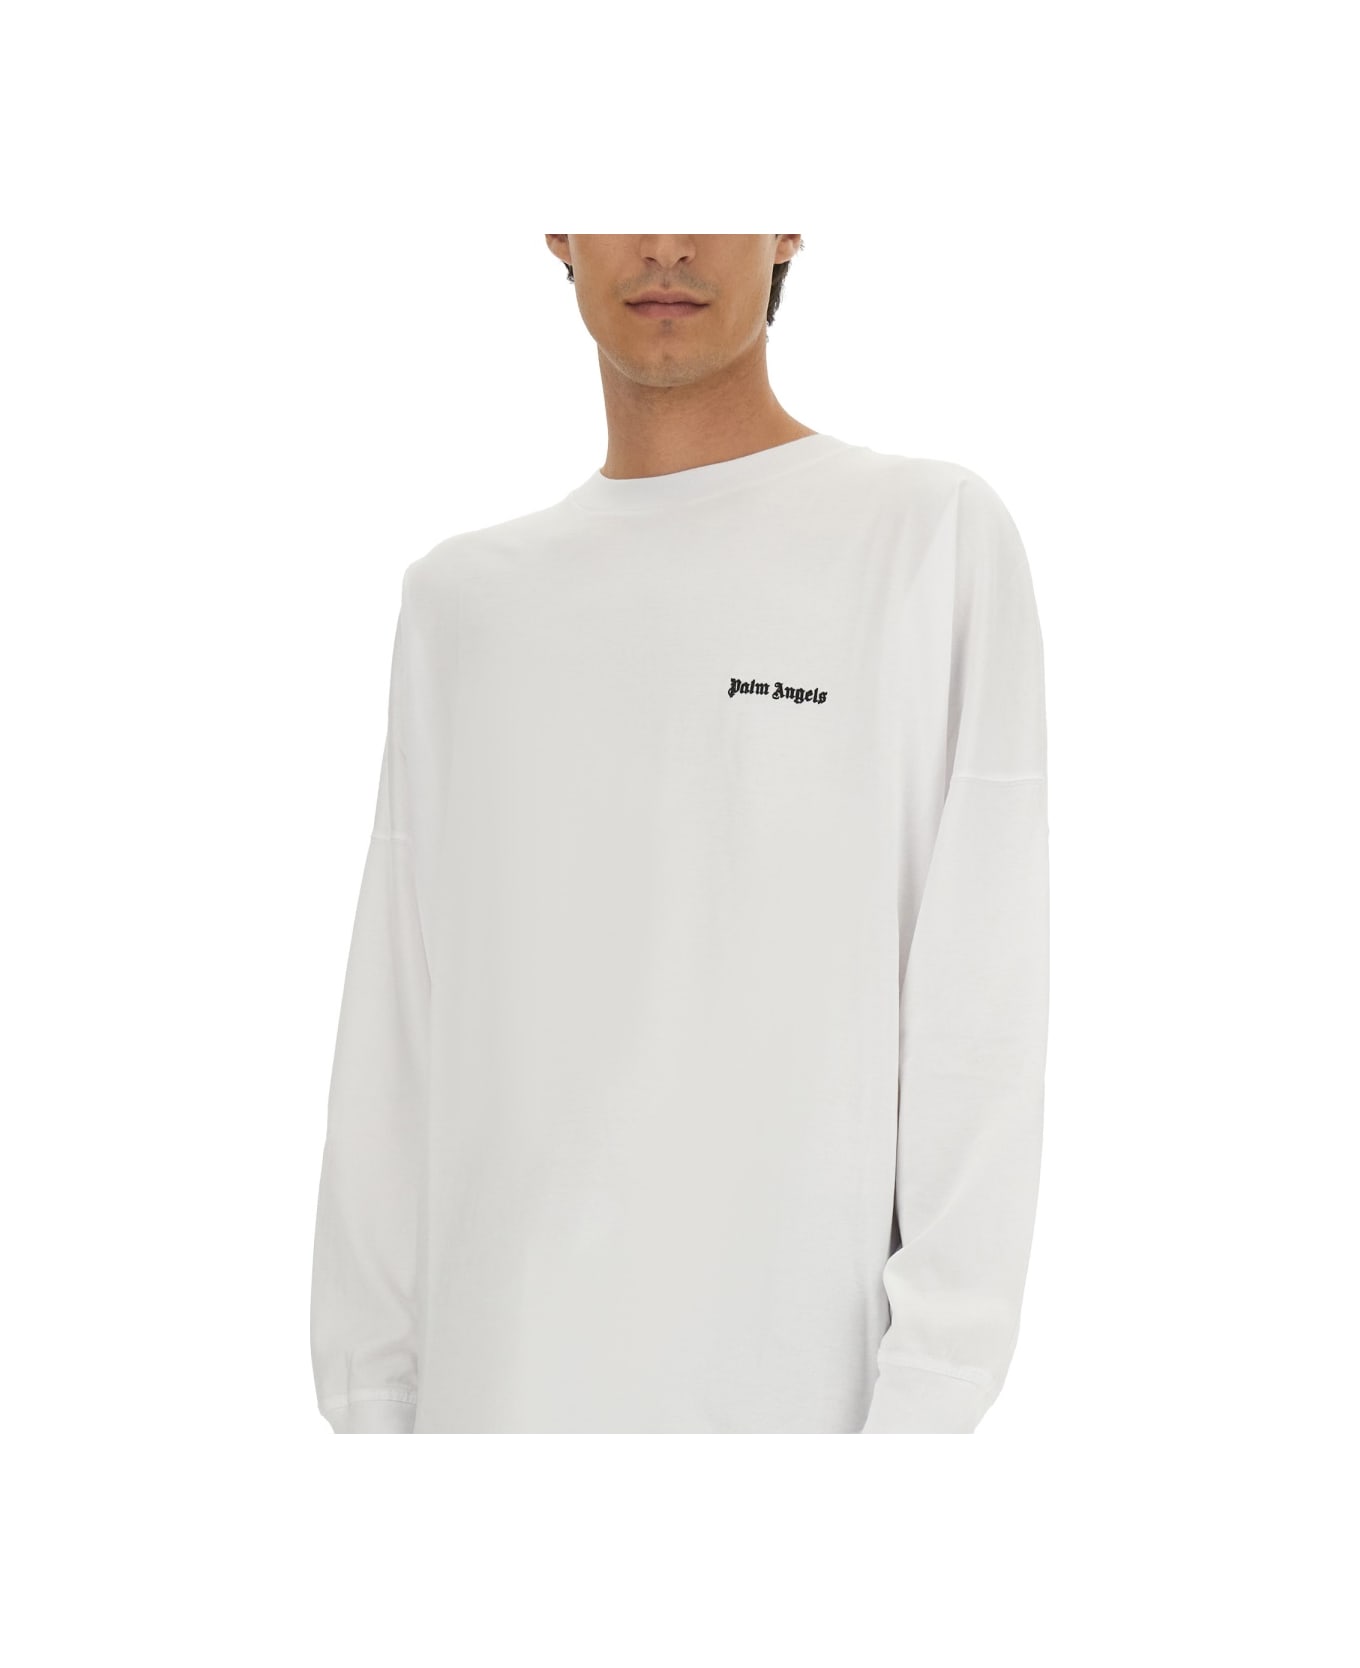 Palm Angels Sweatshirt With Logo - MULTICOLOUR